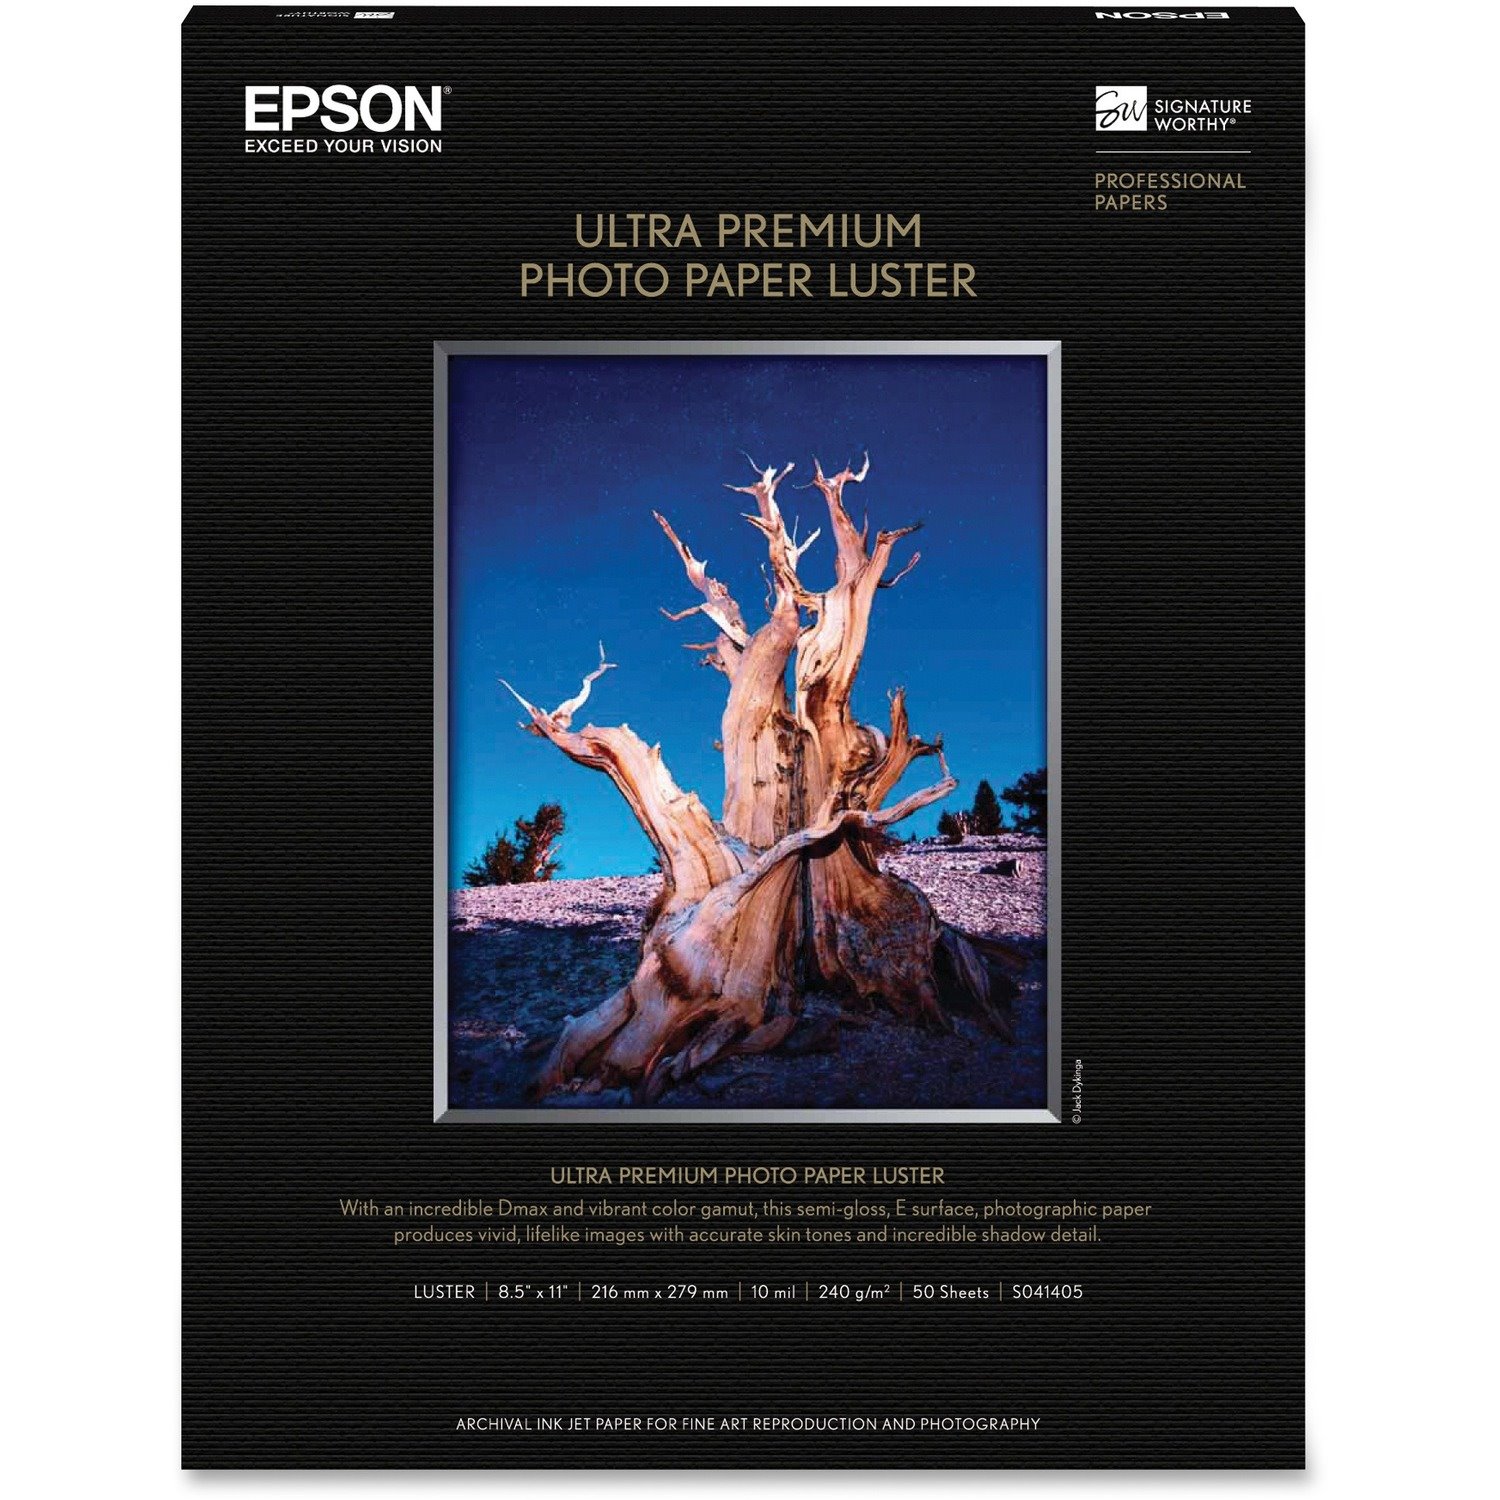 Epson Inkjet Photo Paper - White